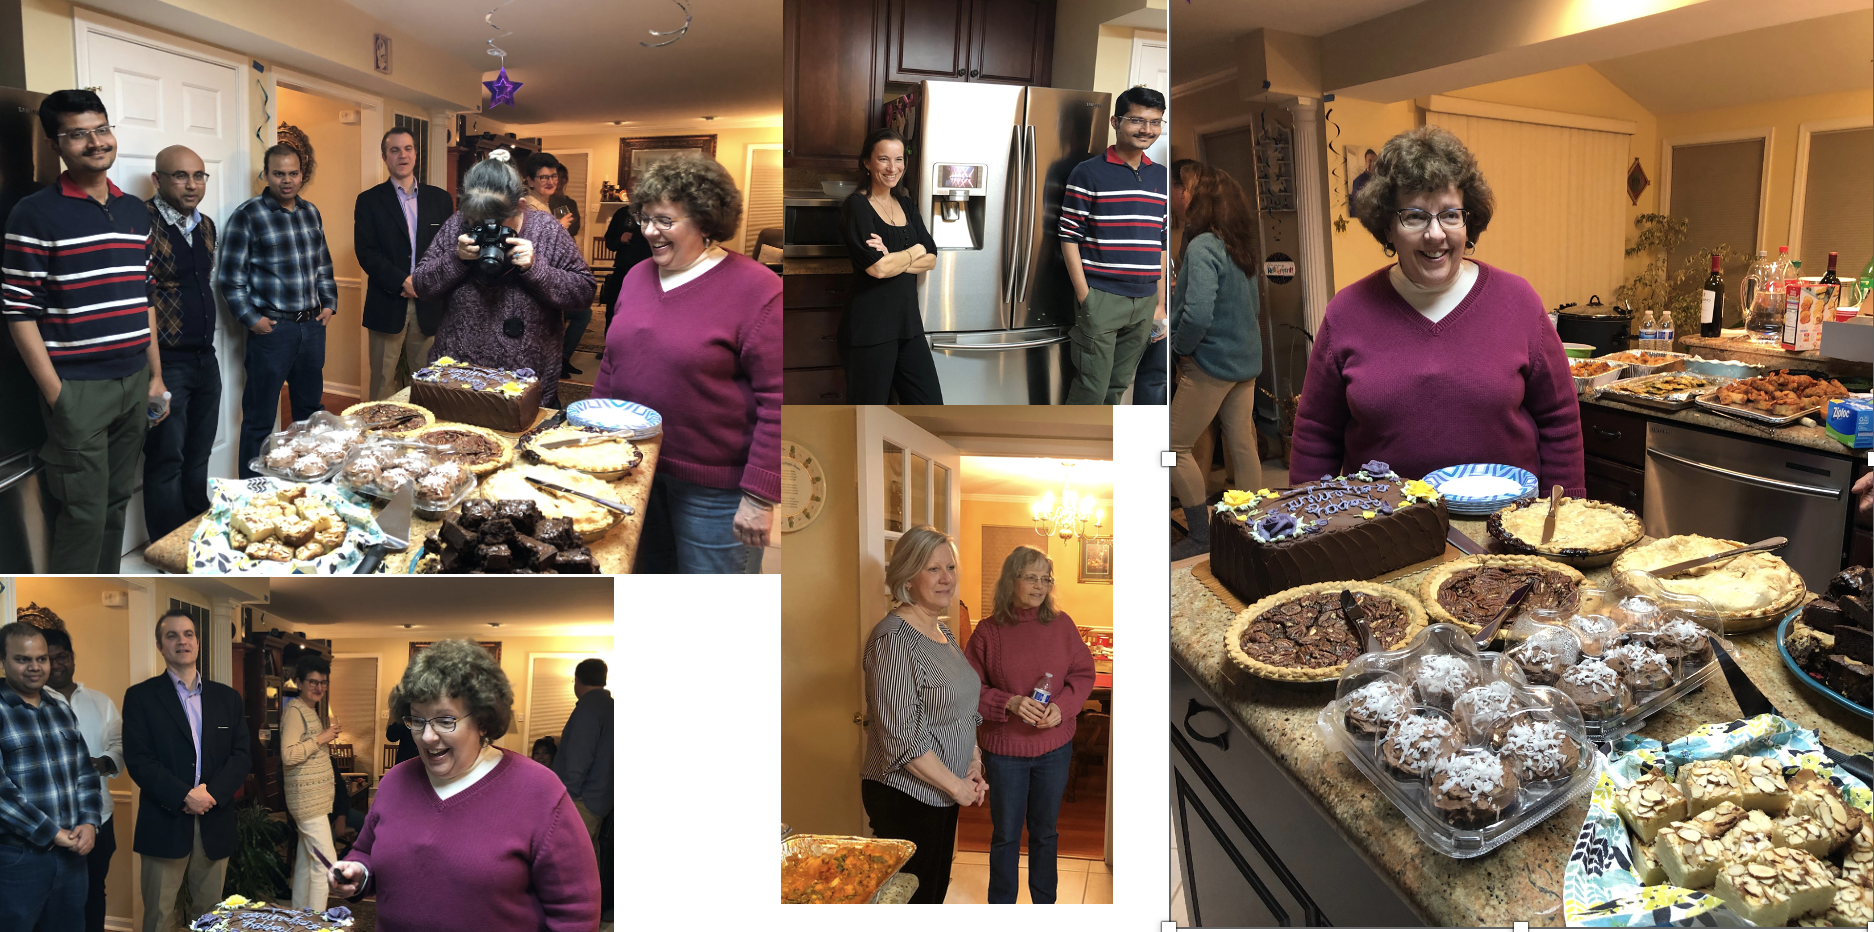 Linda's farewell party Feb 29, 2020